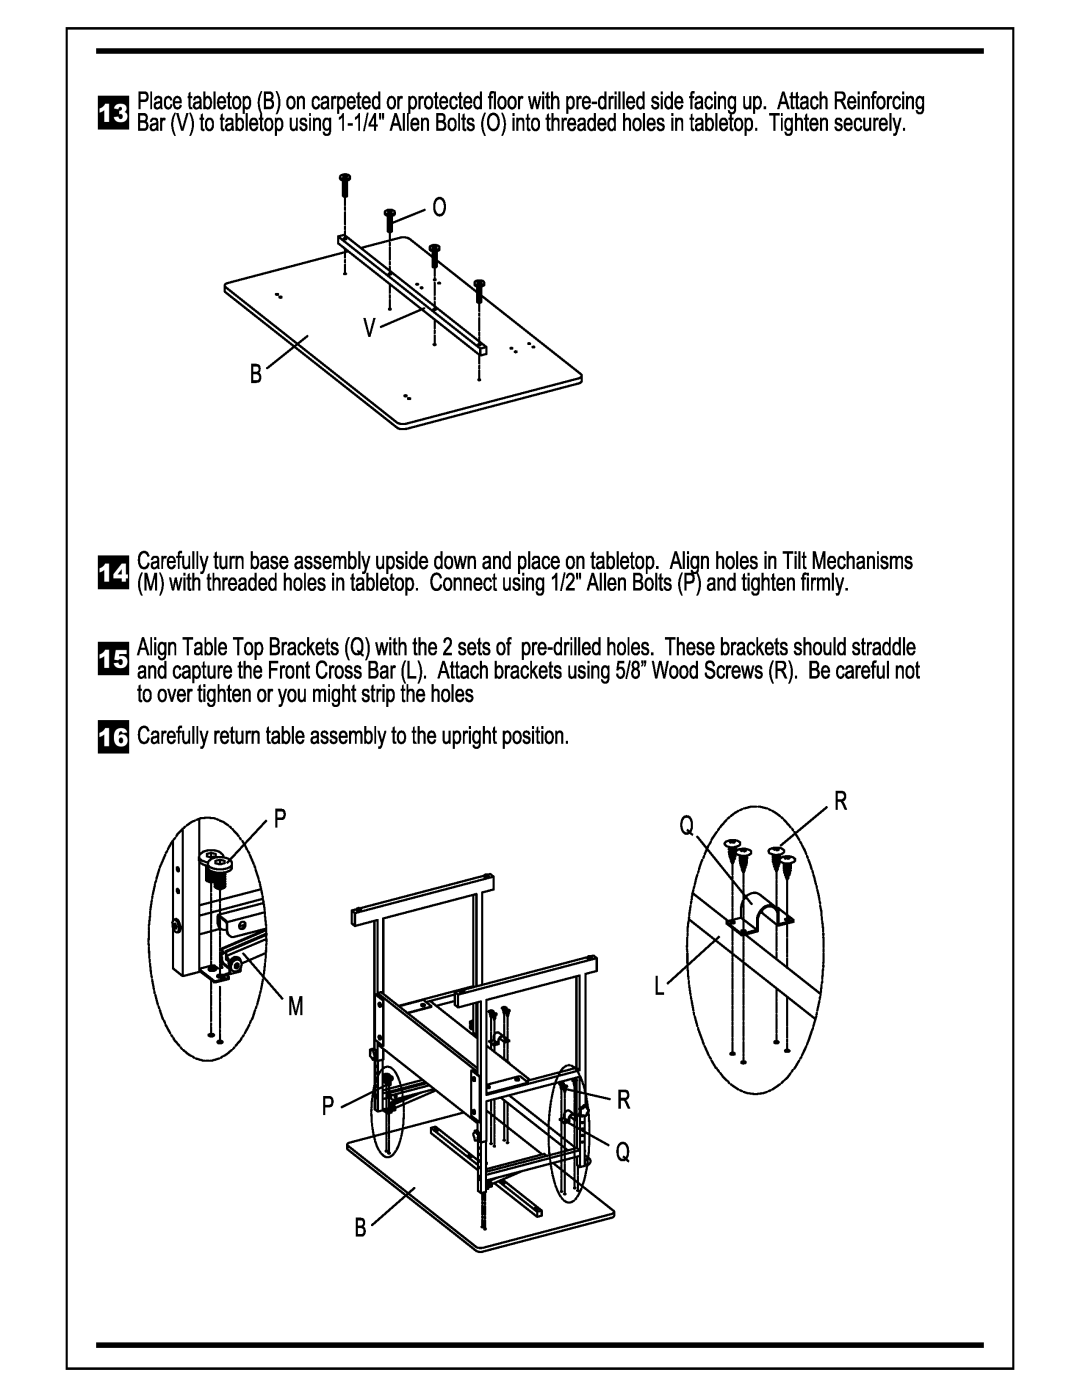 Alvin Drawing Table manual 